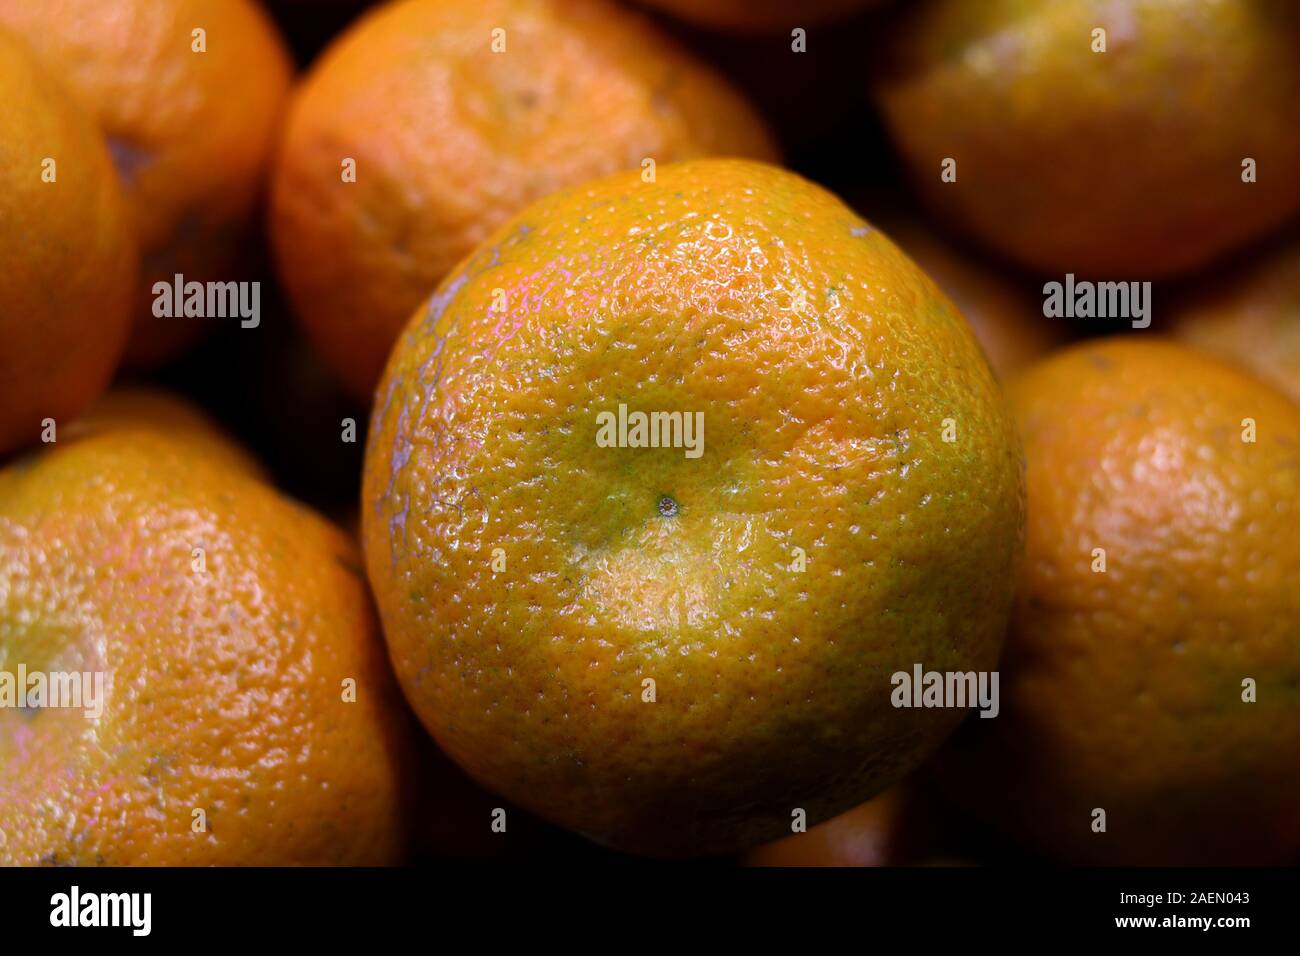 Sweet Orange for sale in market Stock Photo